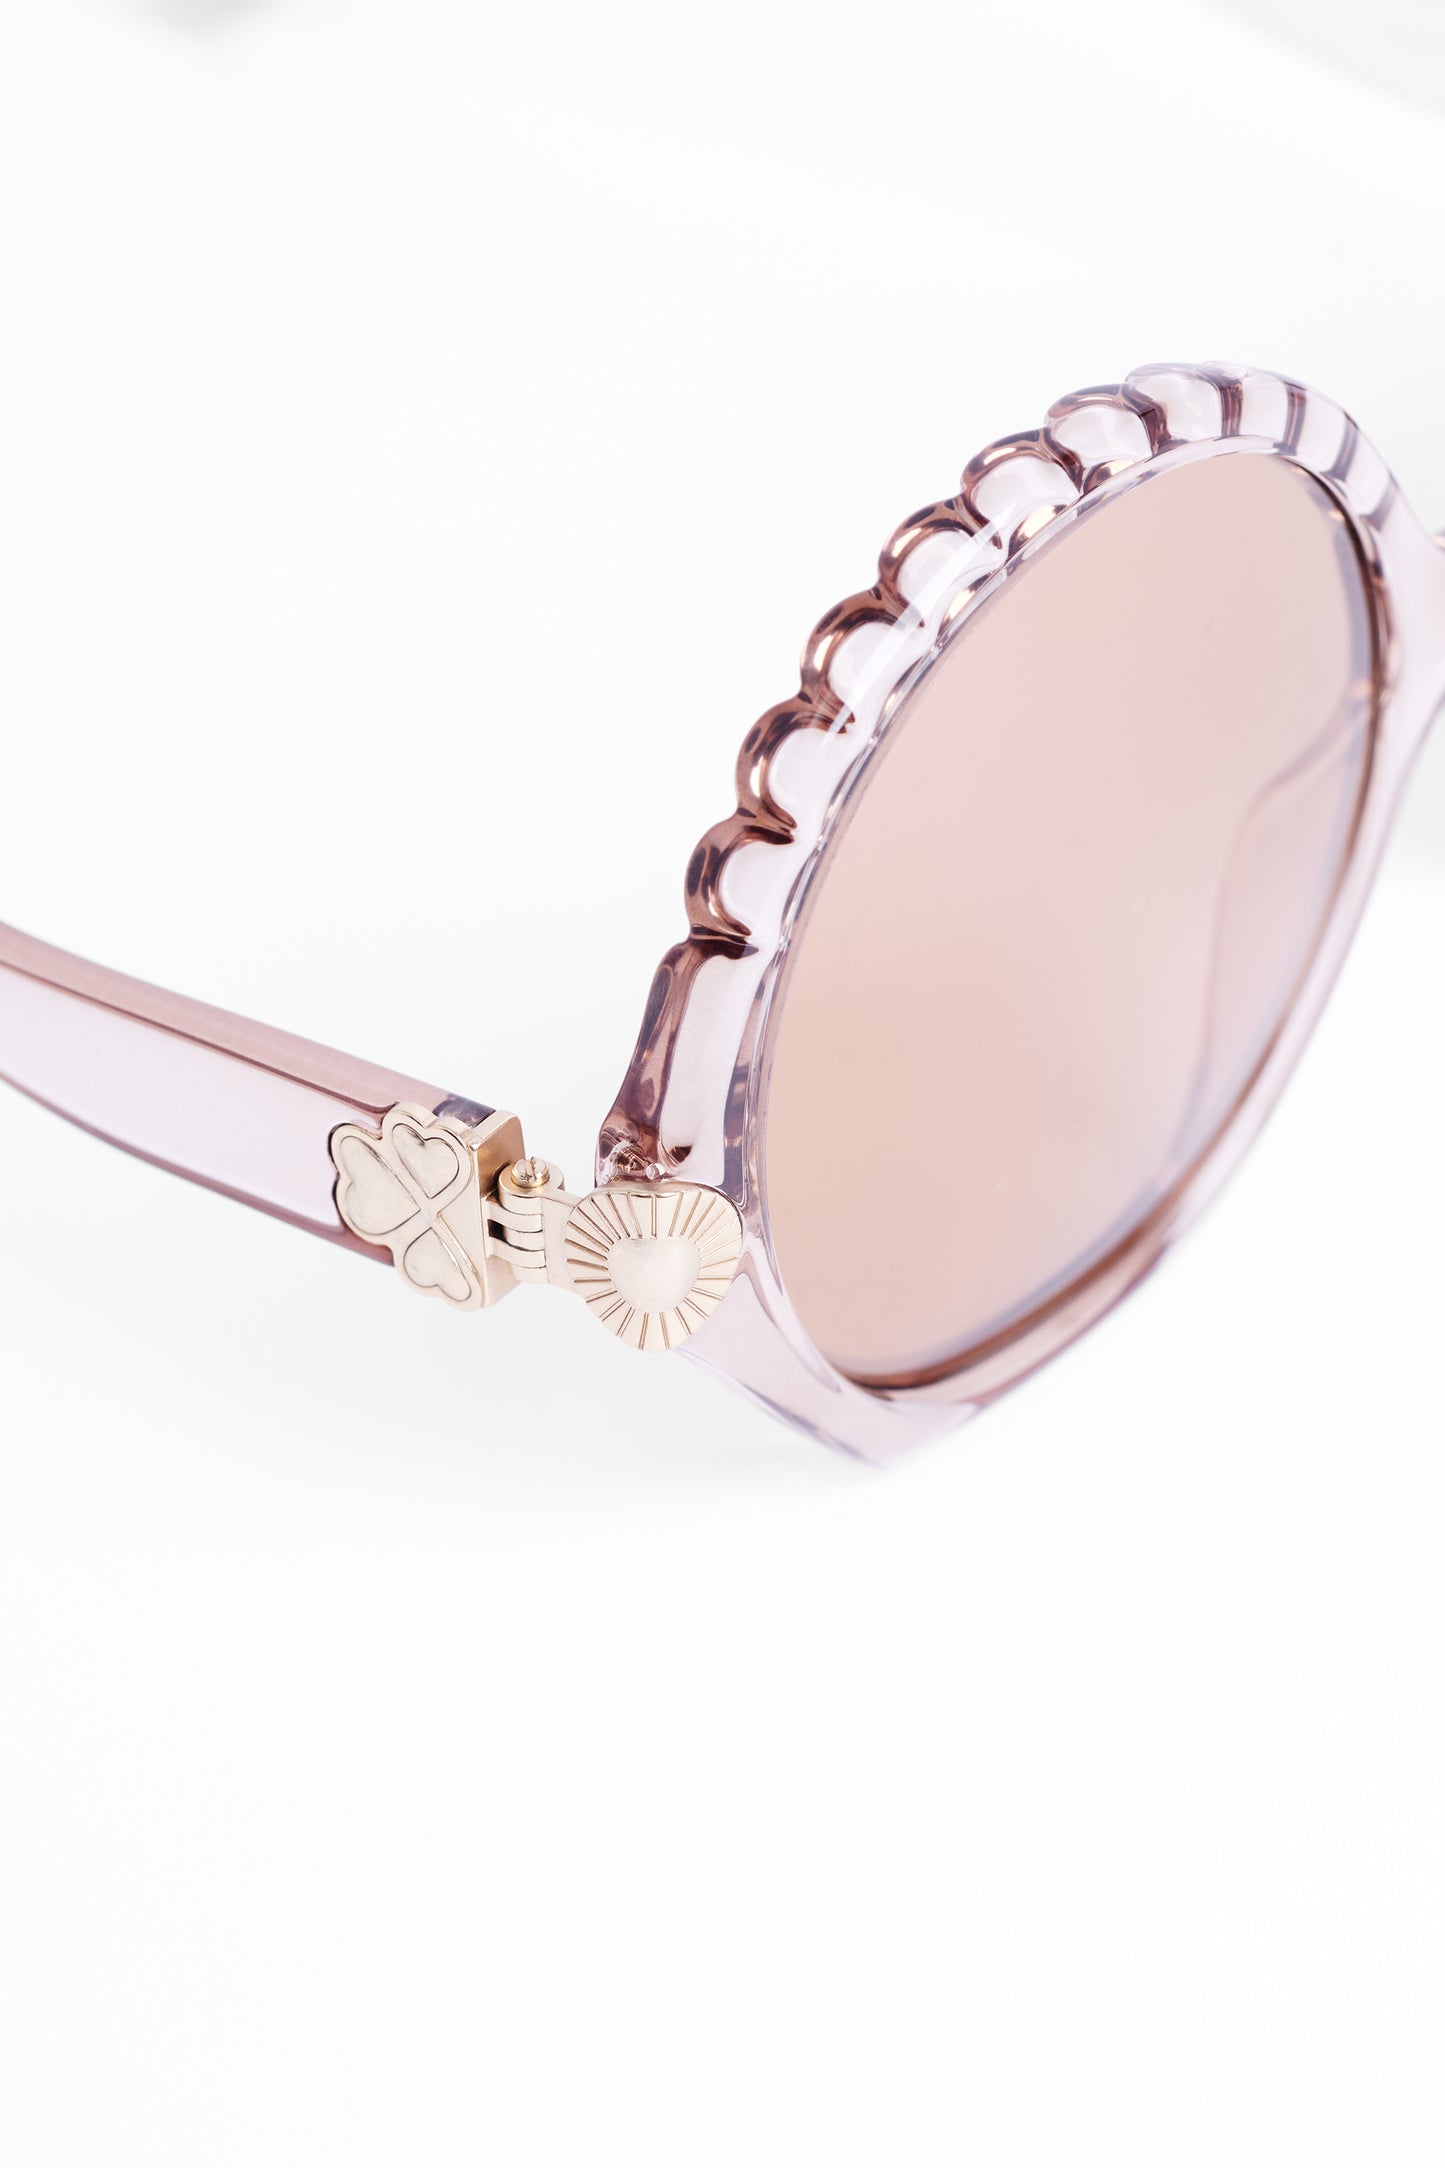 2021 Oversize Round Seashell Blush Sunglasses